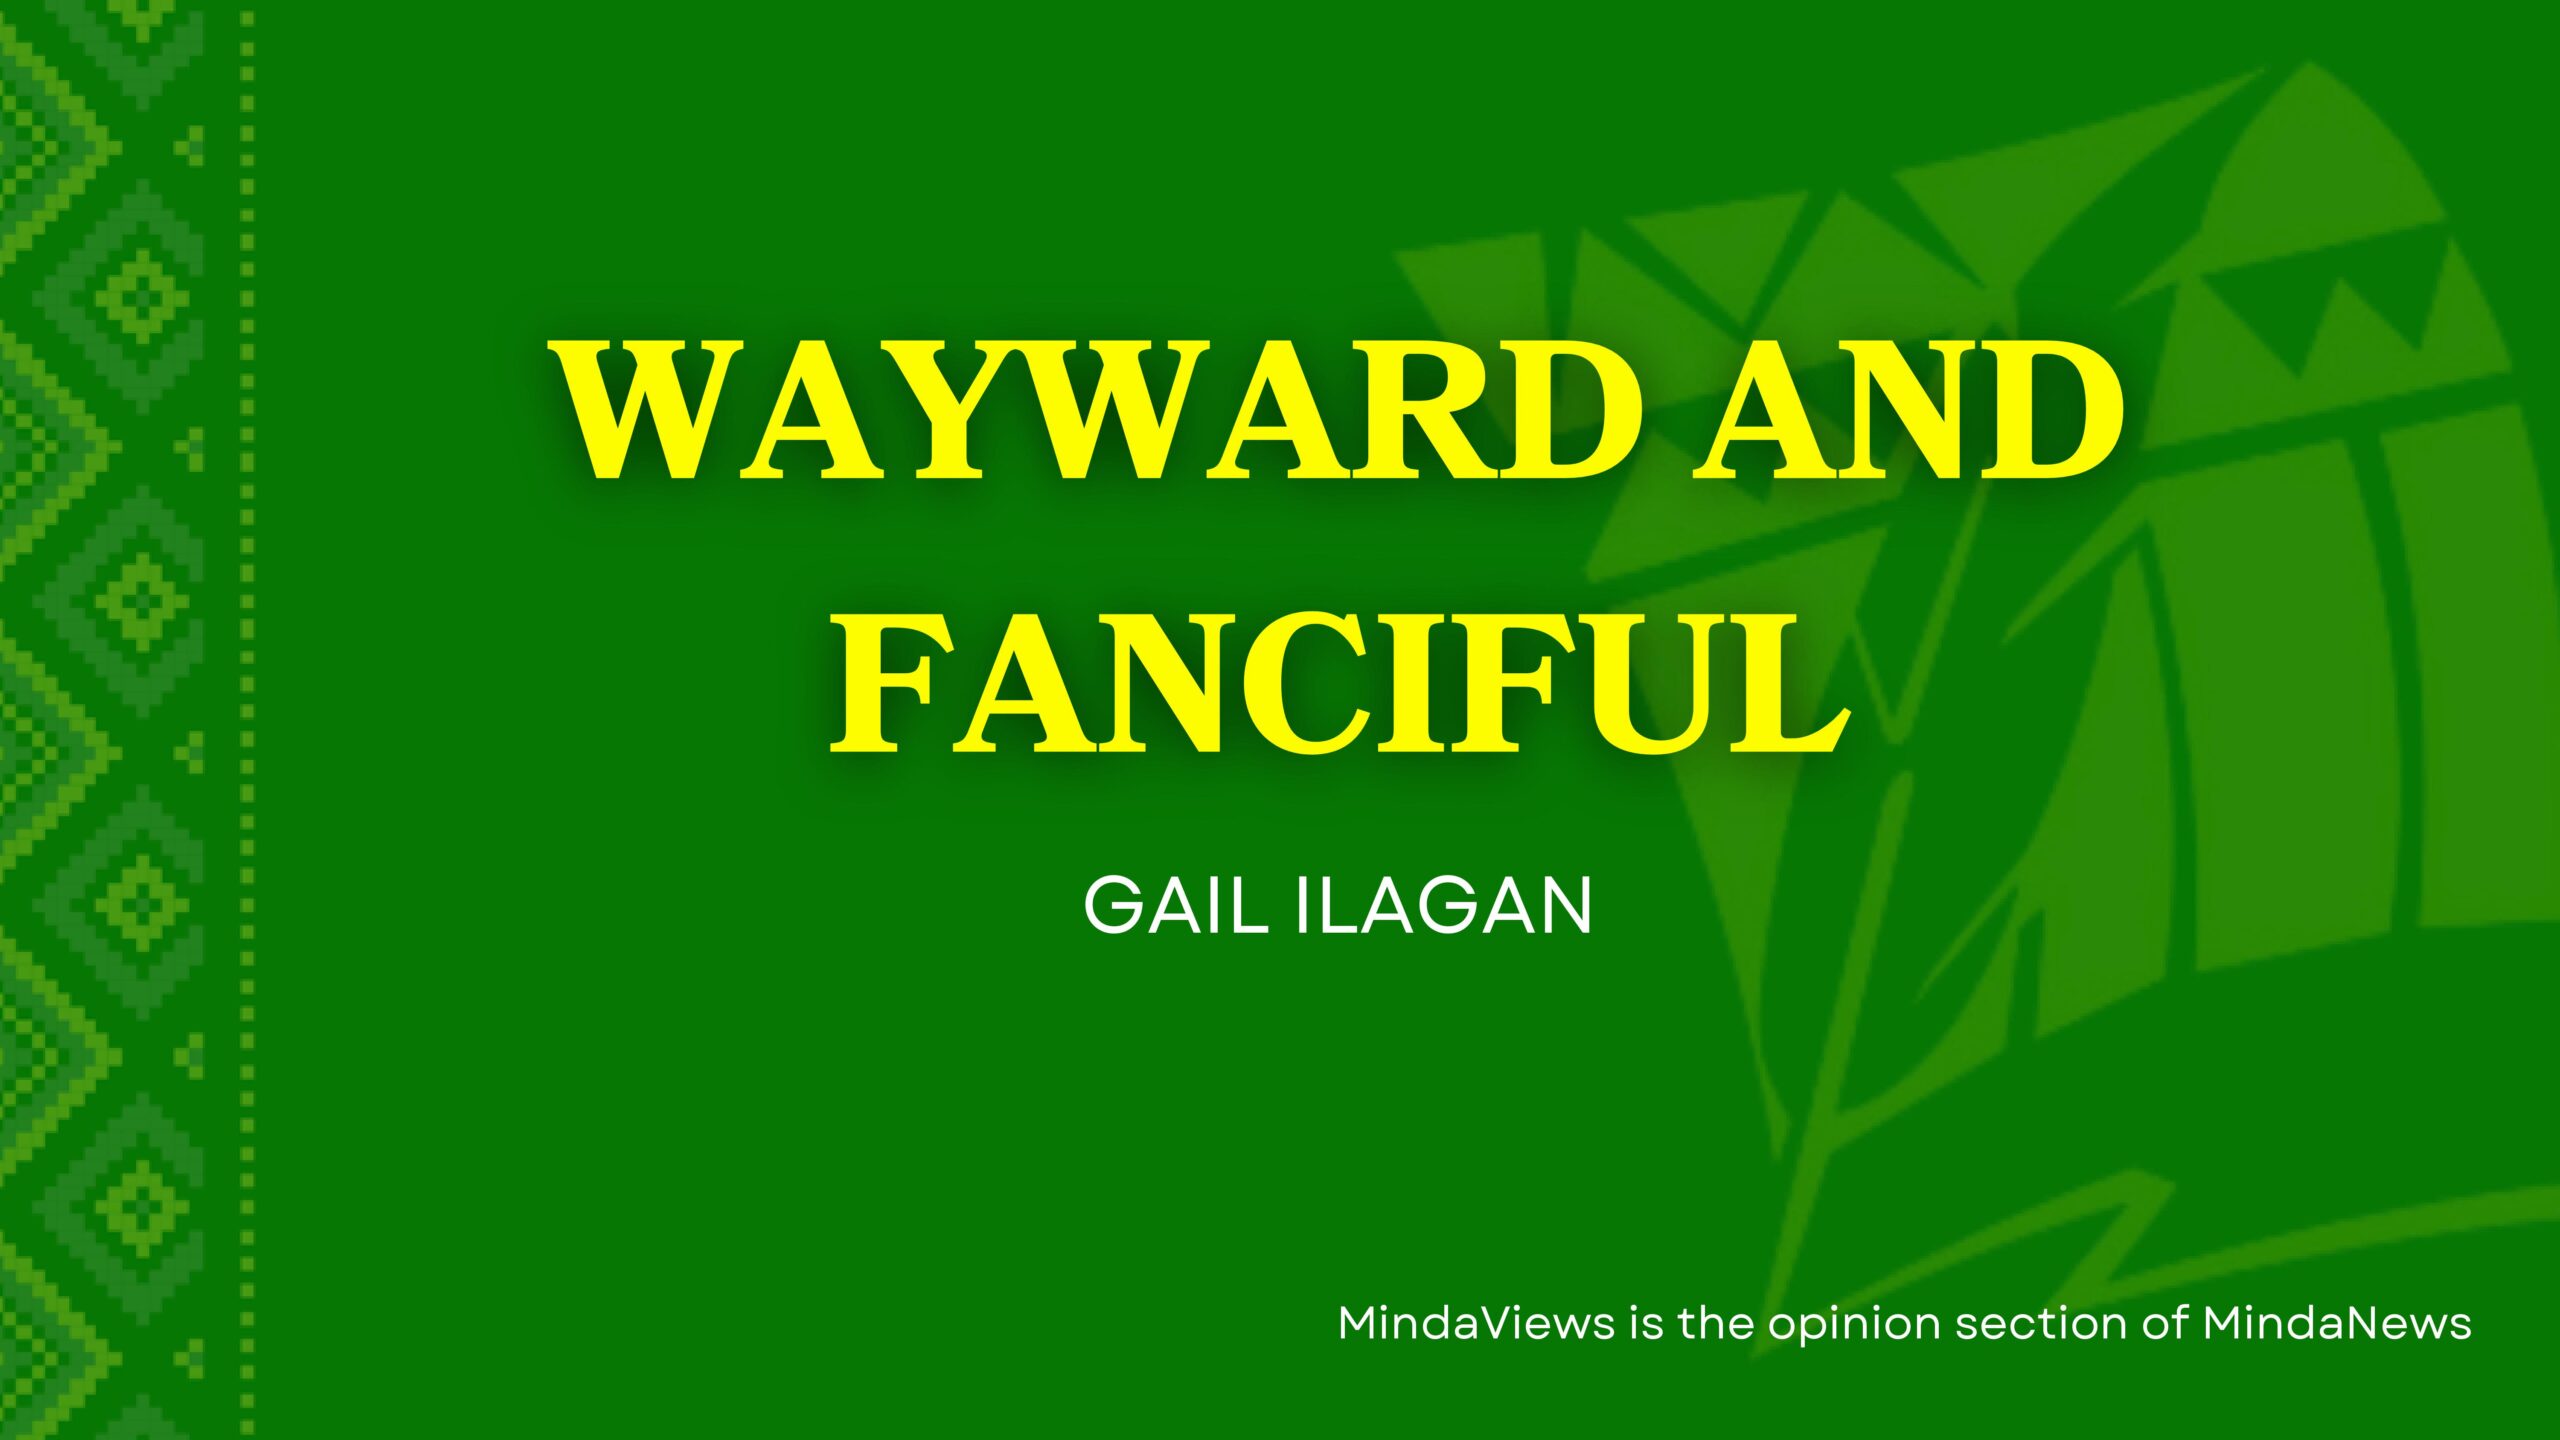 mindaviews gail ilagan wayward and fanciful column opinion